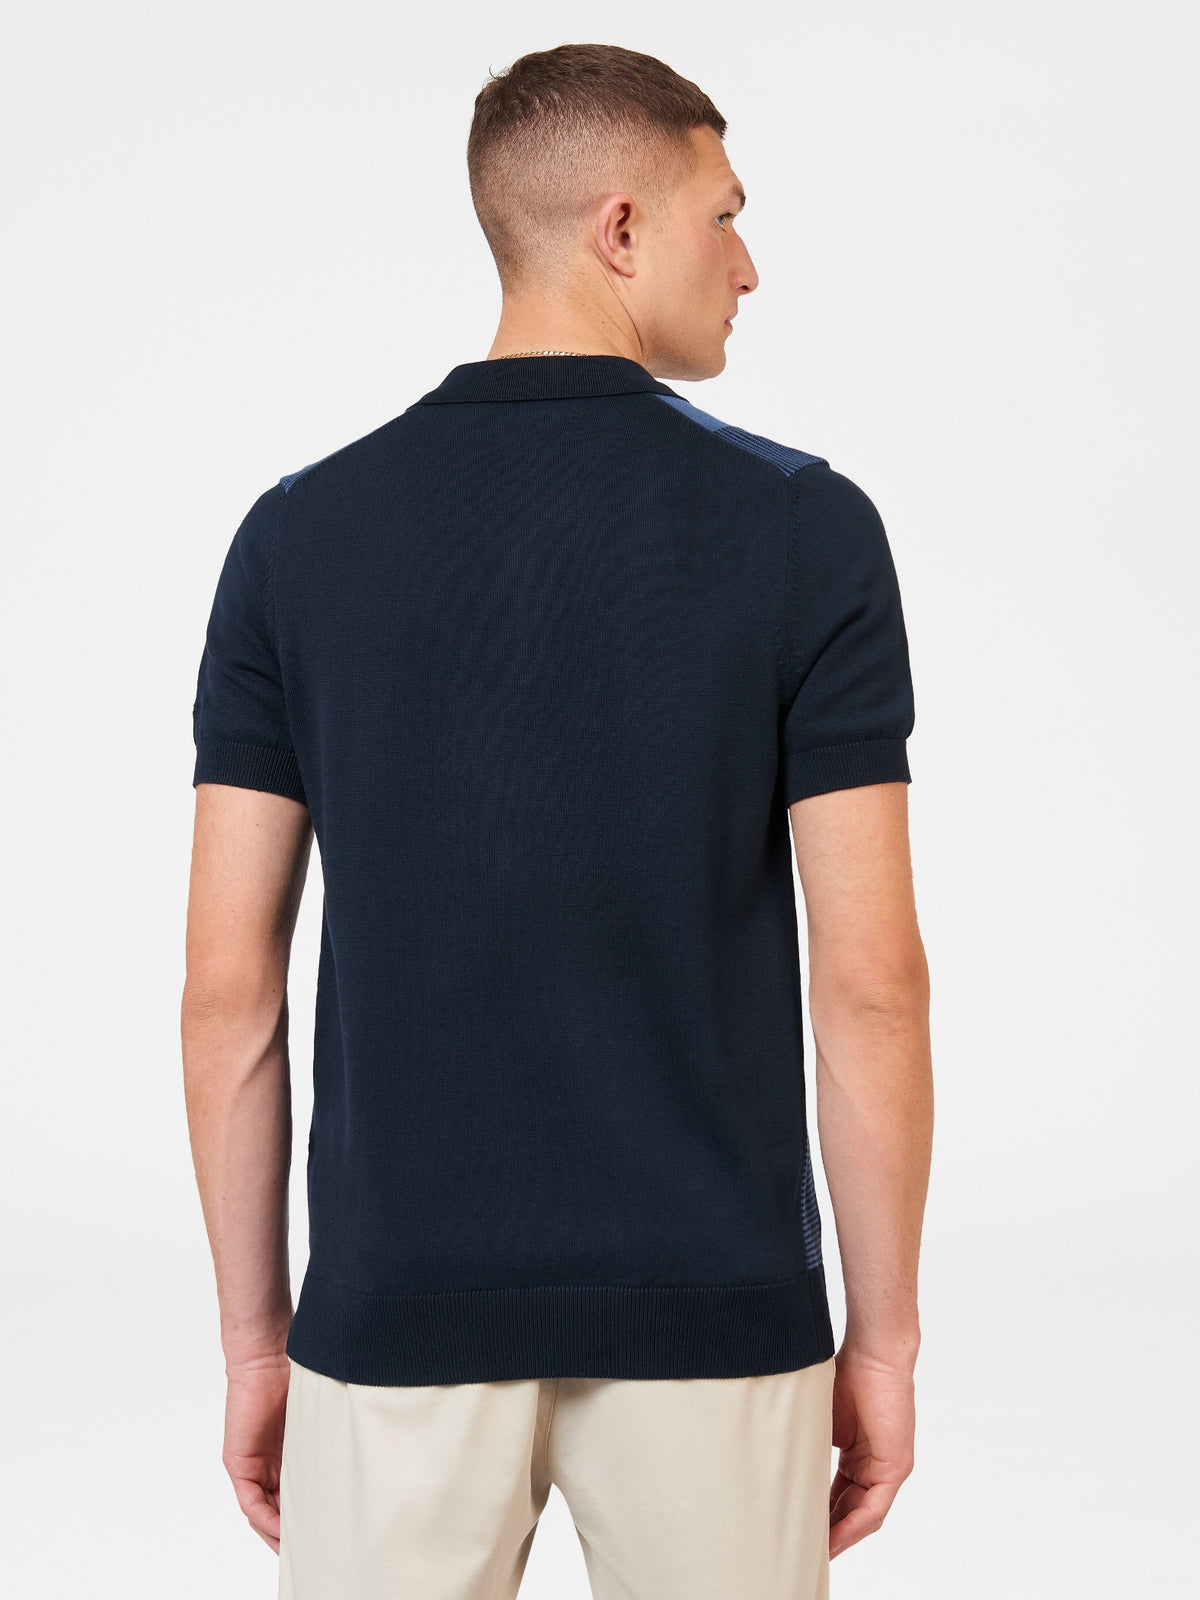 Ben Sherman Mens Inarsia Stripe Knit Polo Shirt, 03, 74196, Dark Navy